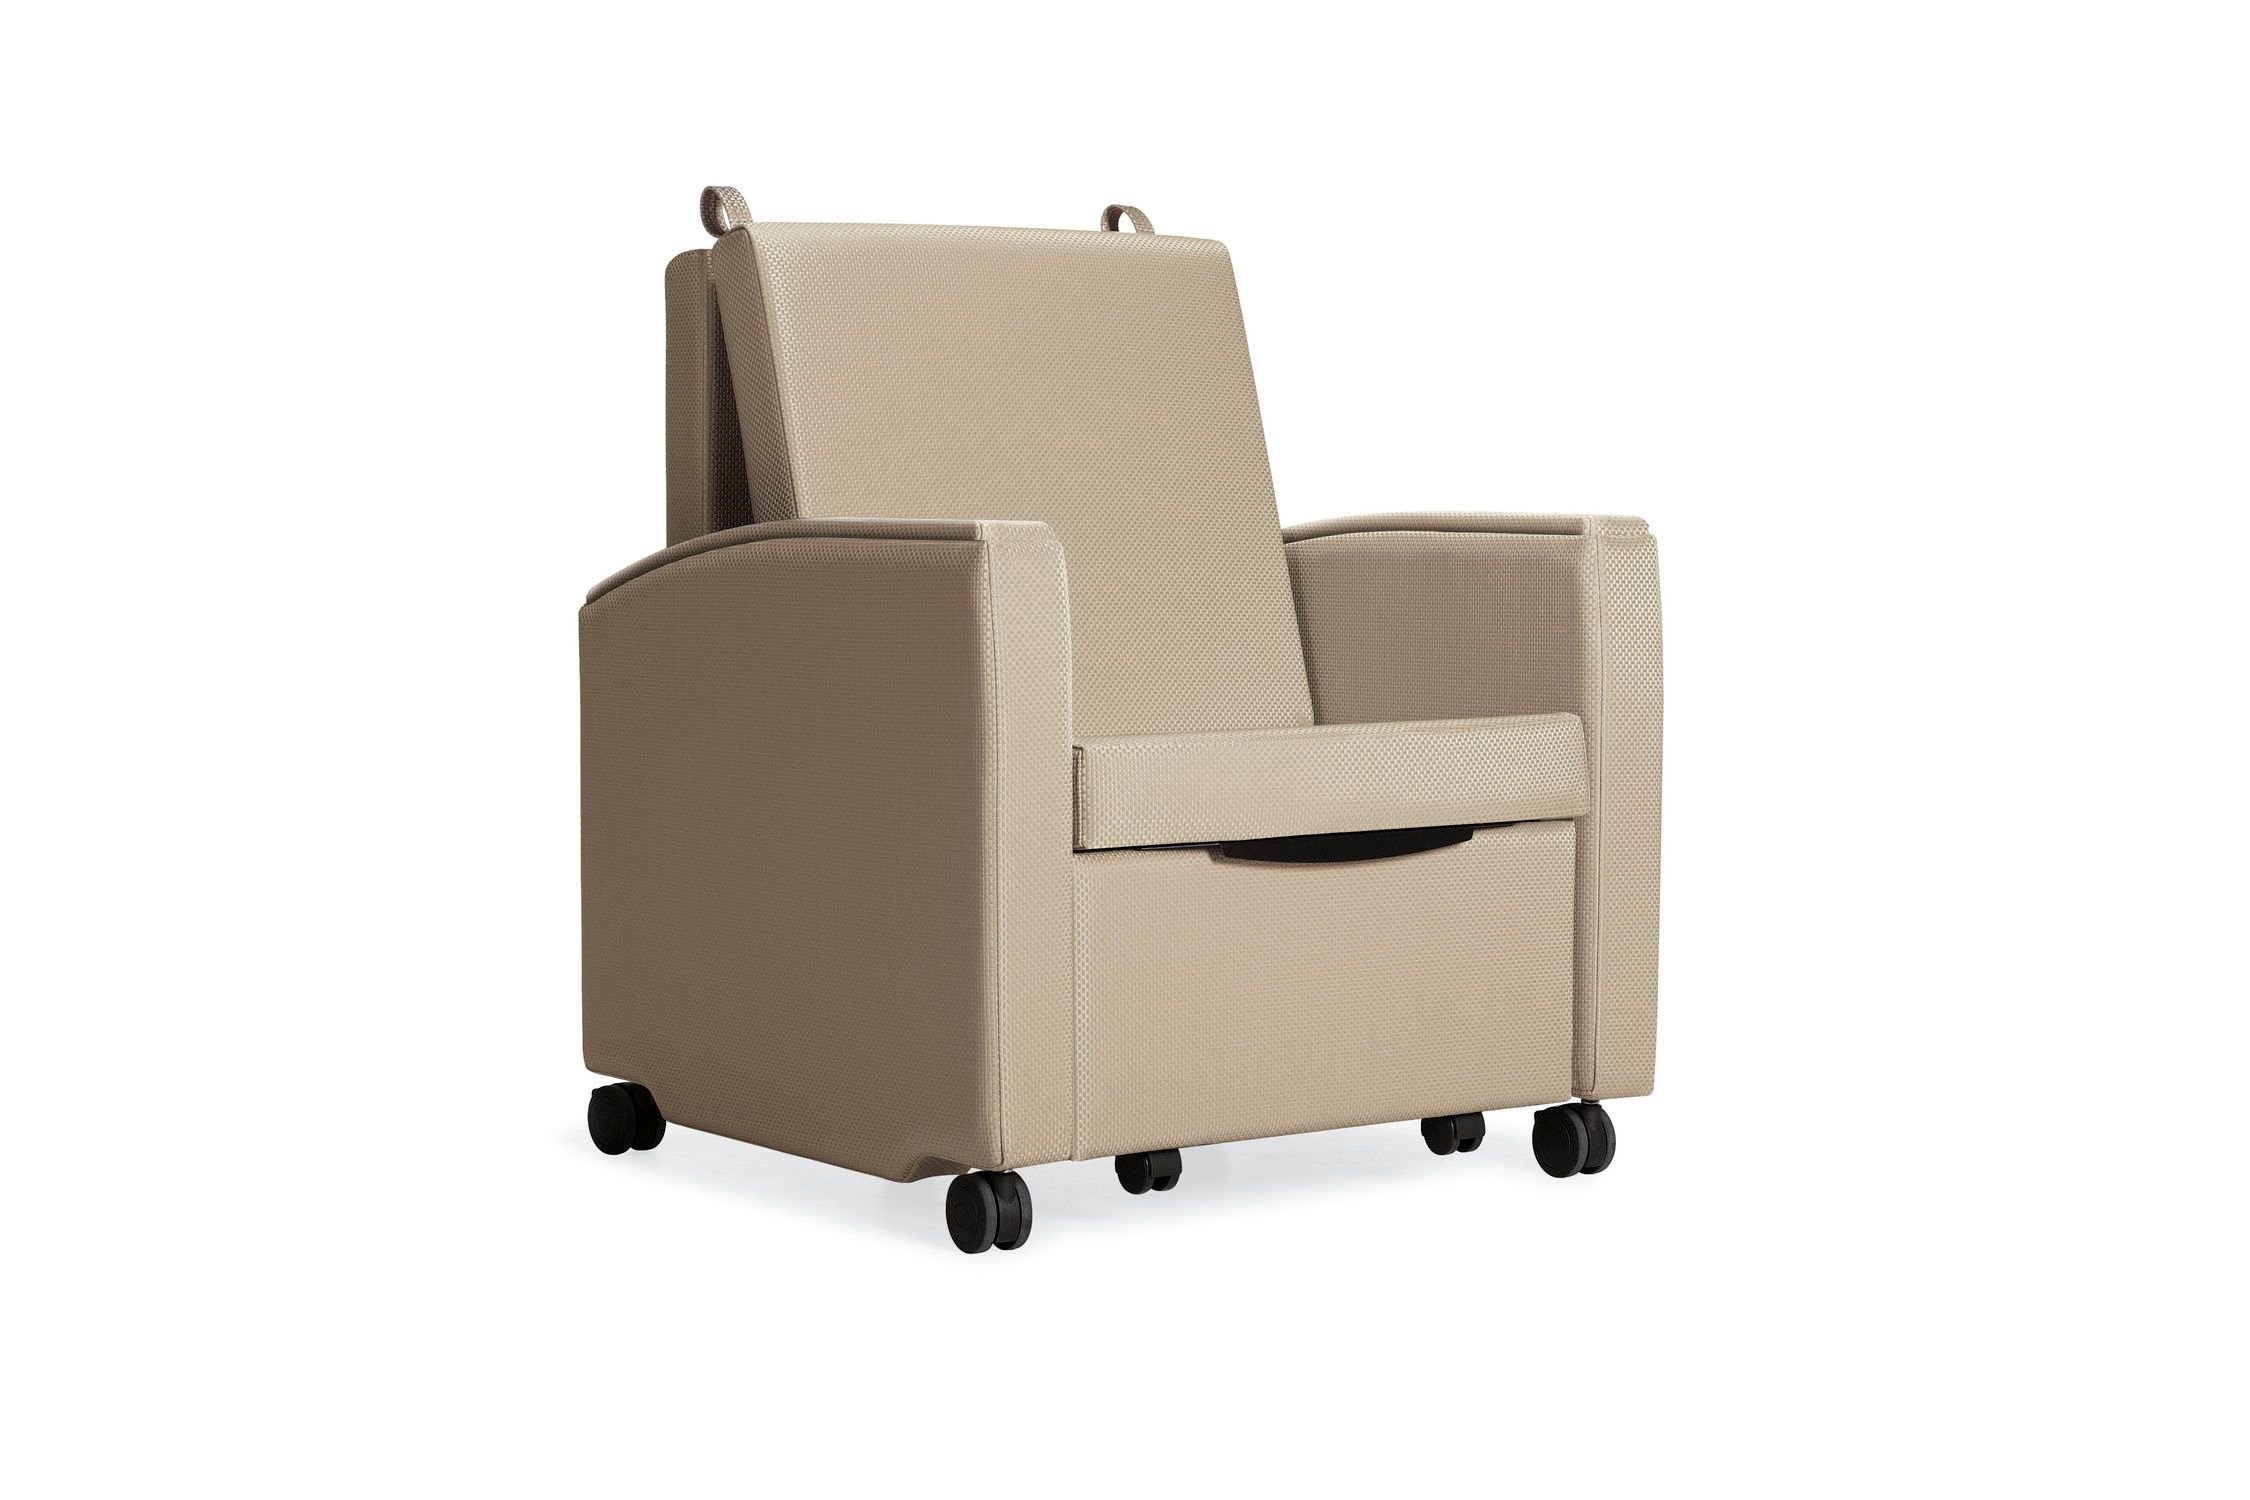 Healthcare facility convertible chair GC3778 Global Care